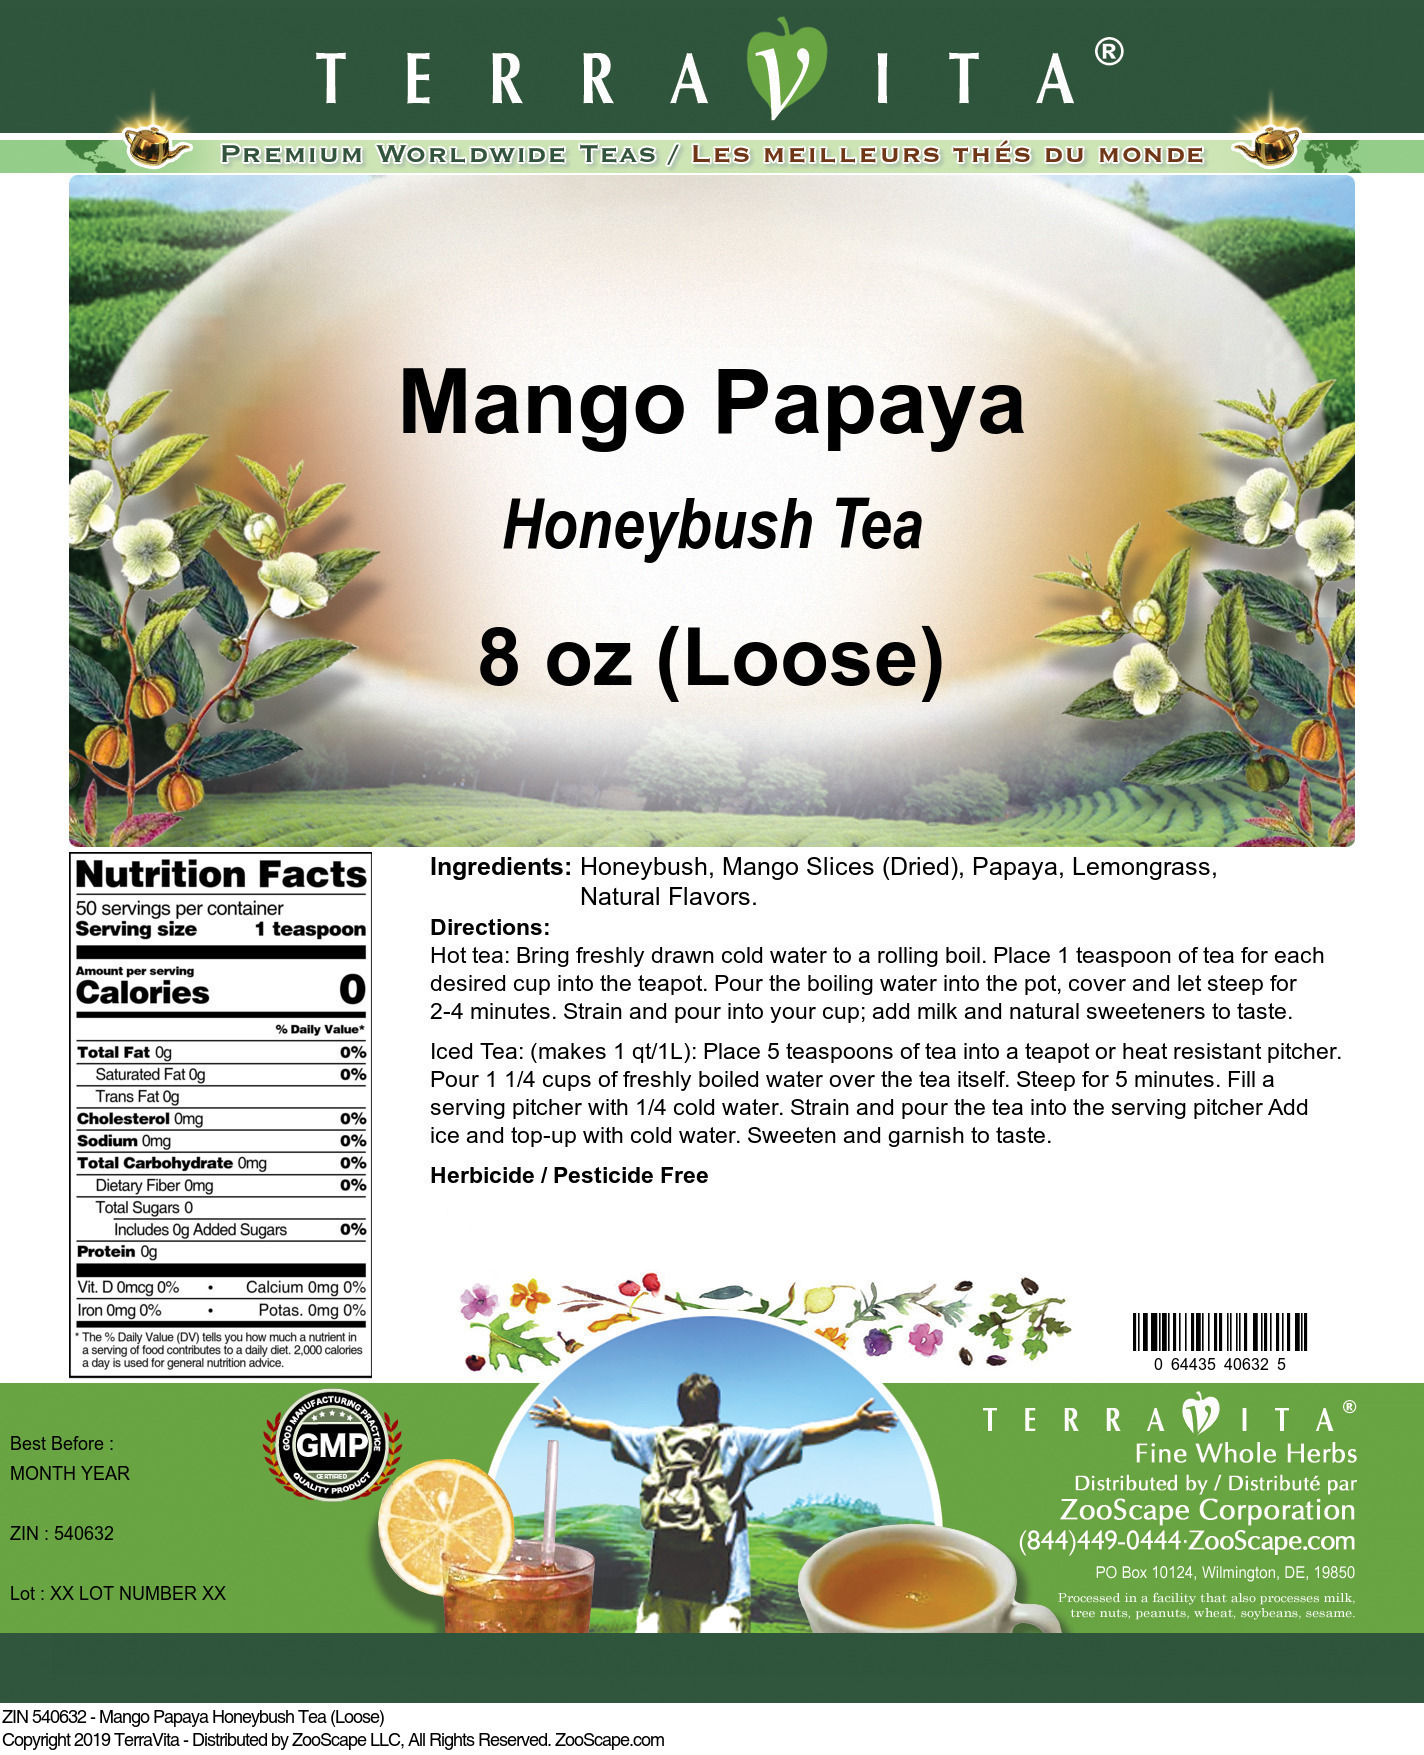 Mango Papaya Honeybush Tea (Loose) - Label